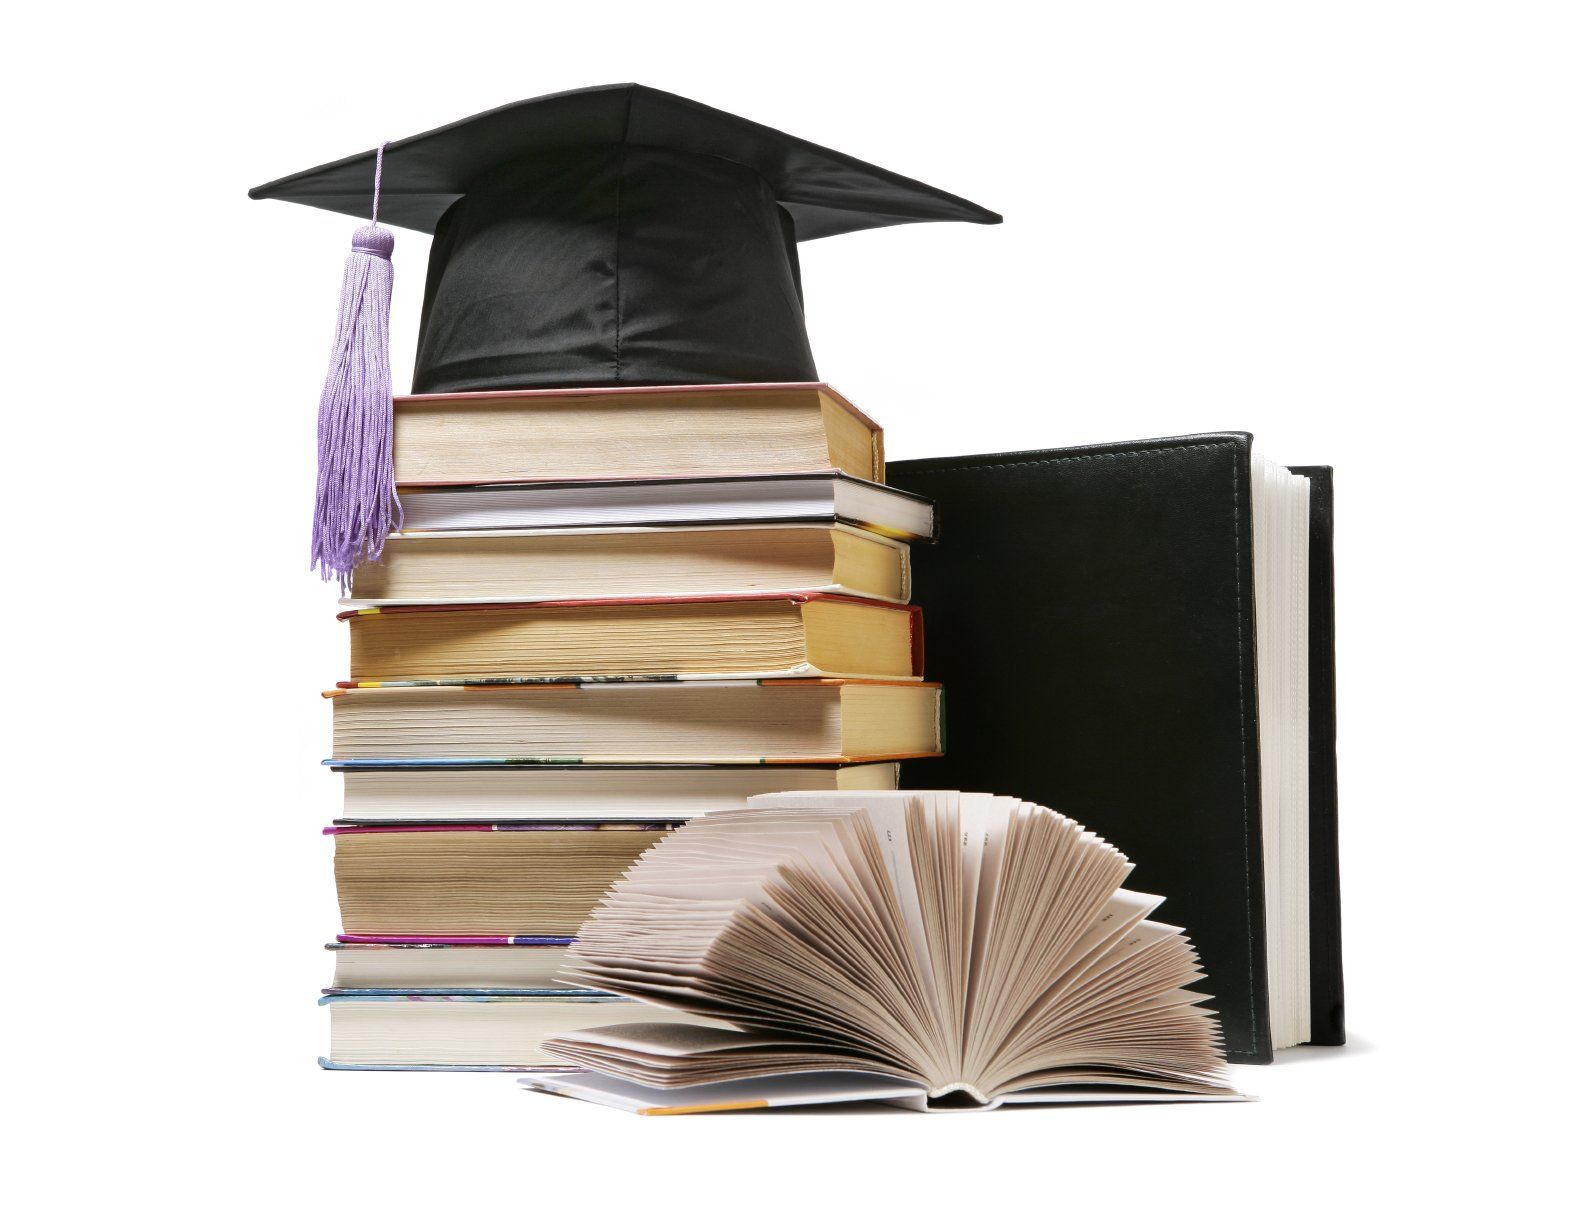 A graduation cap sitting on a bundle of test books.